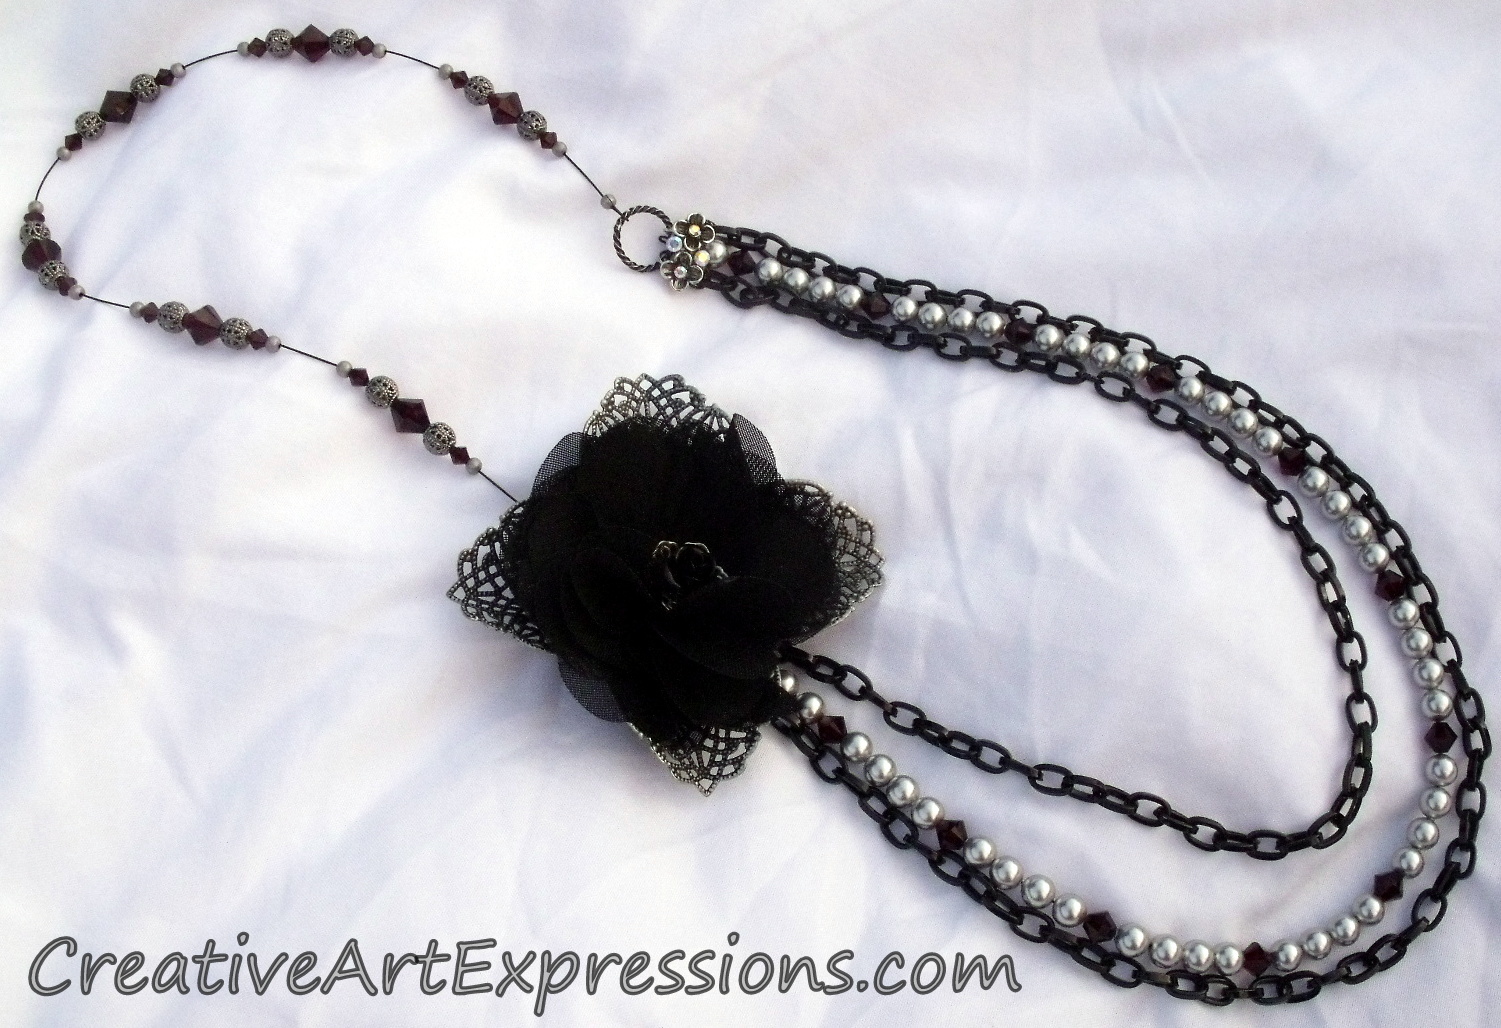 Creative Art Expressions Handmade Black Silver & Garnet 3 Strand Flower Necklace Jewelry Design